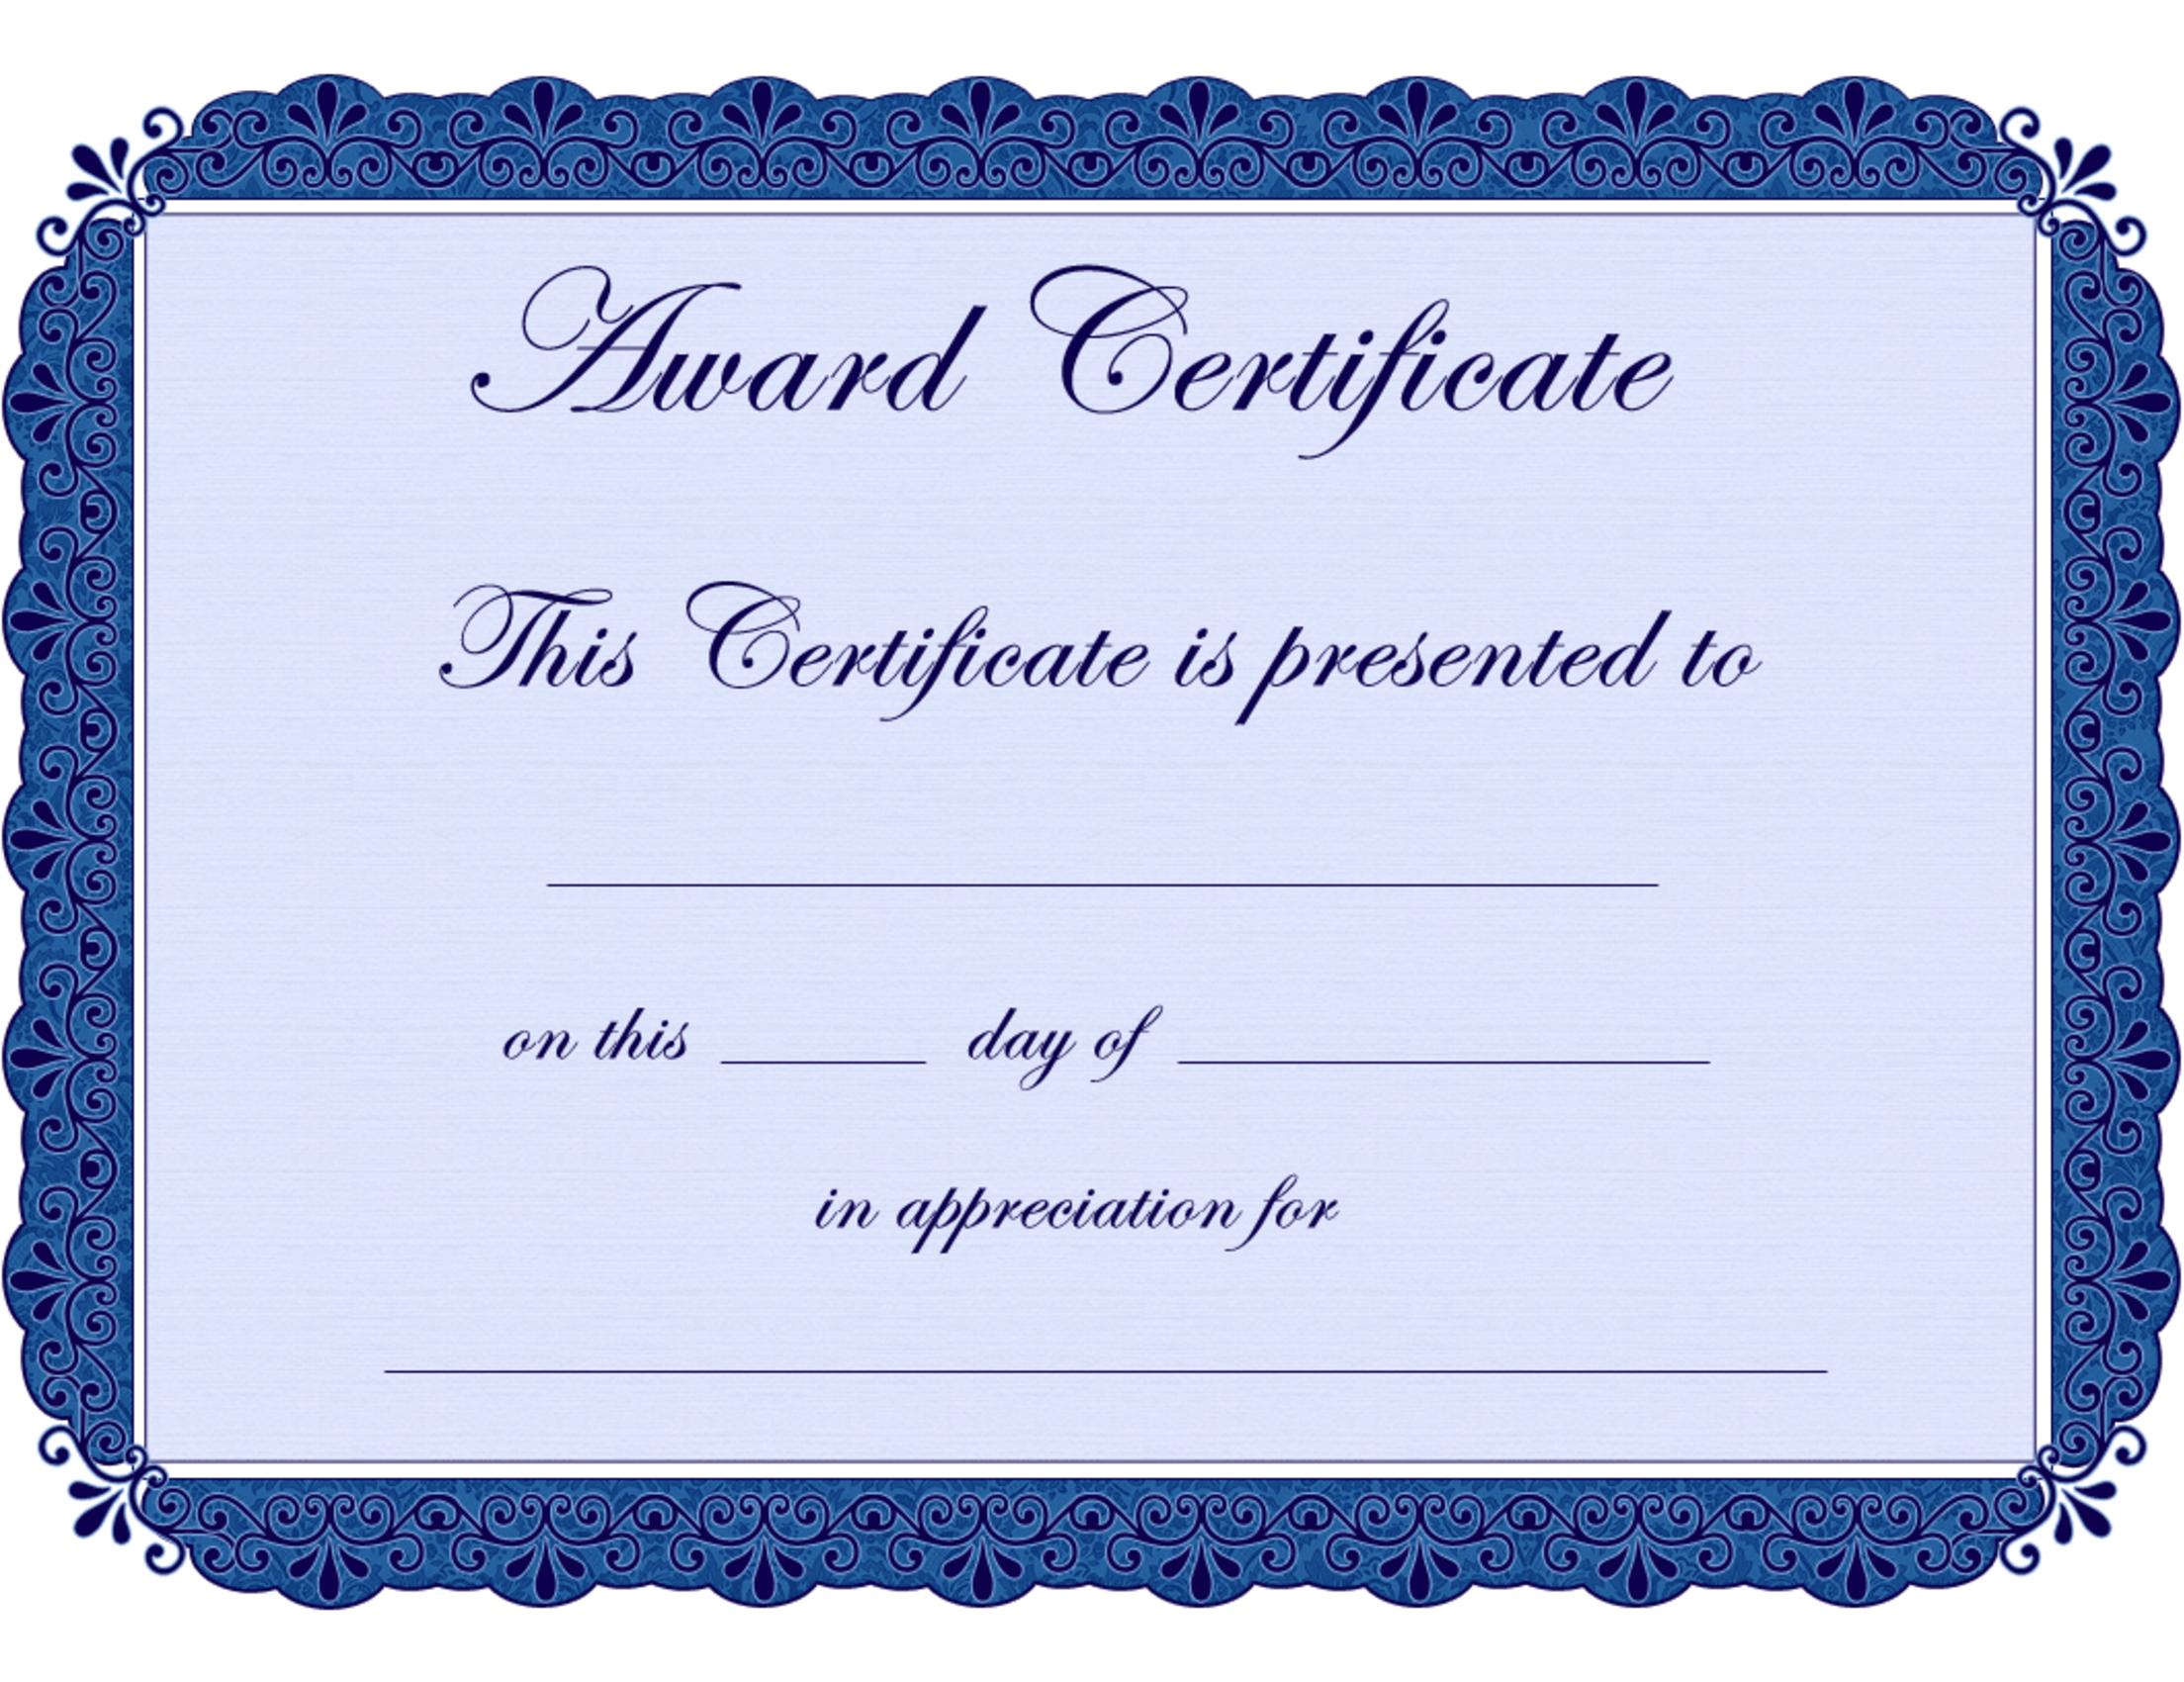 Free Printable Award Certificate Borders |  Award Certificate - Grandparents Certificate Free Printable